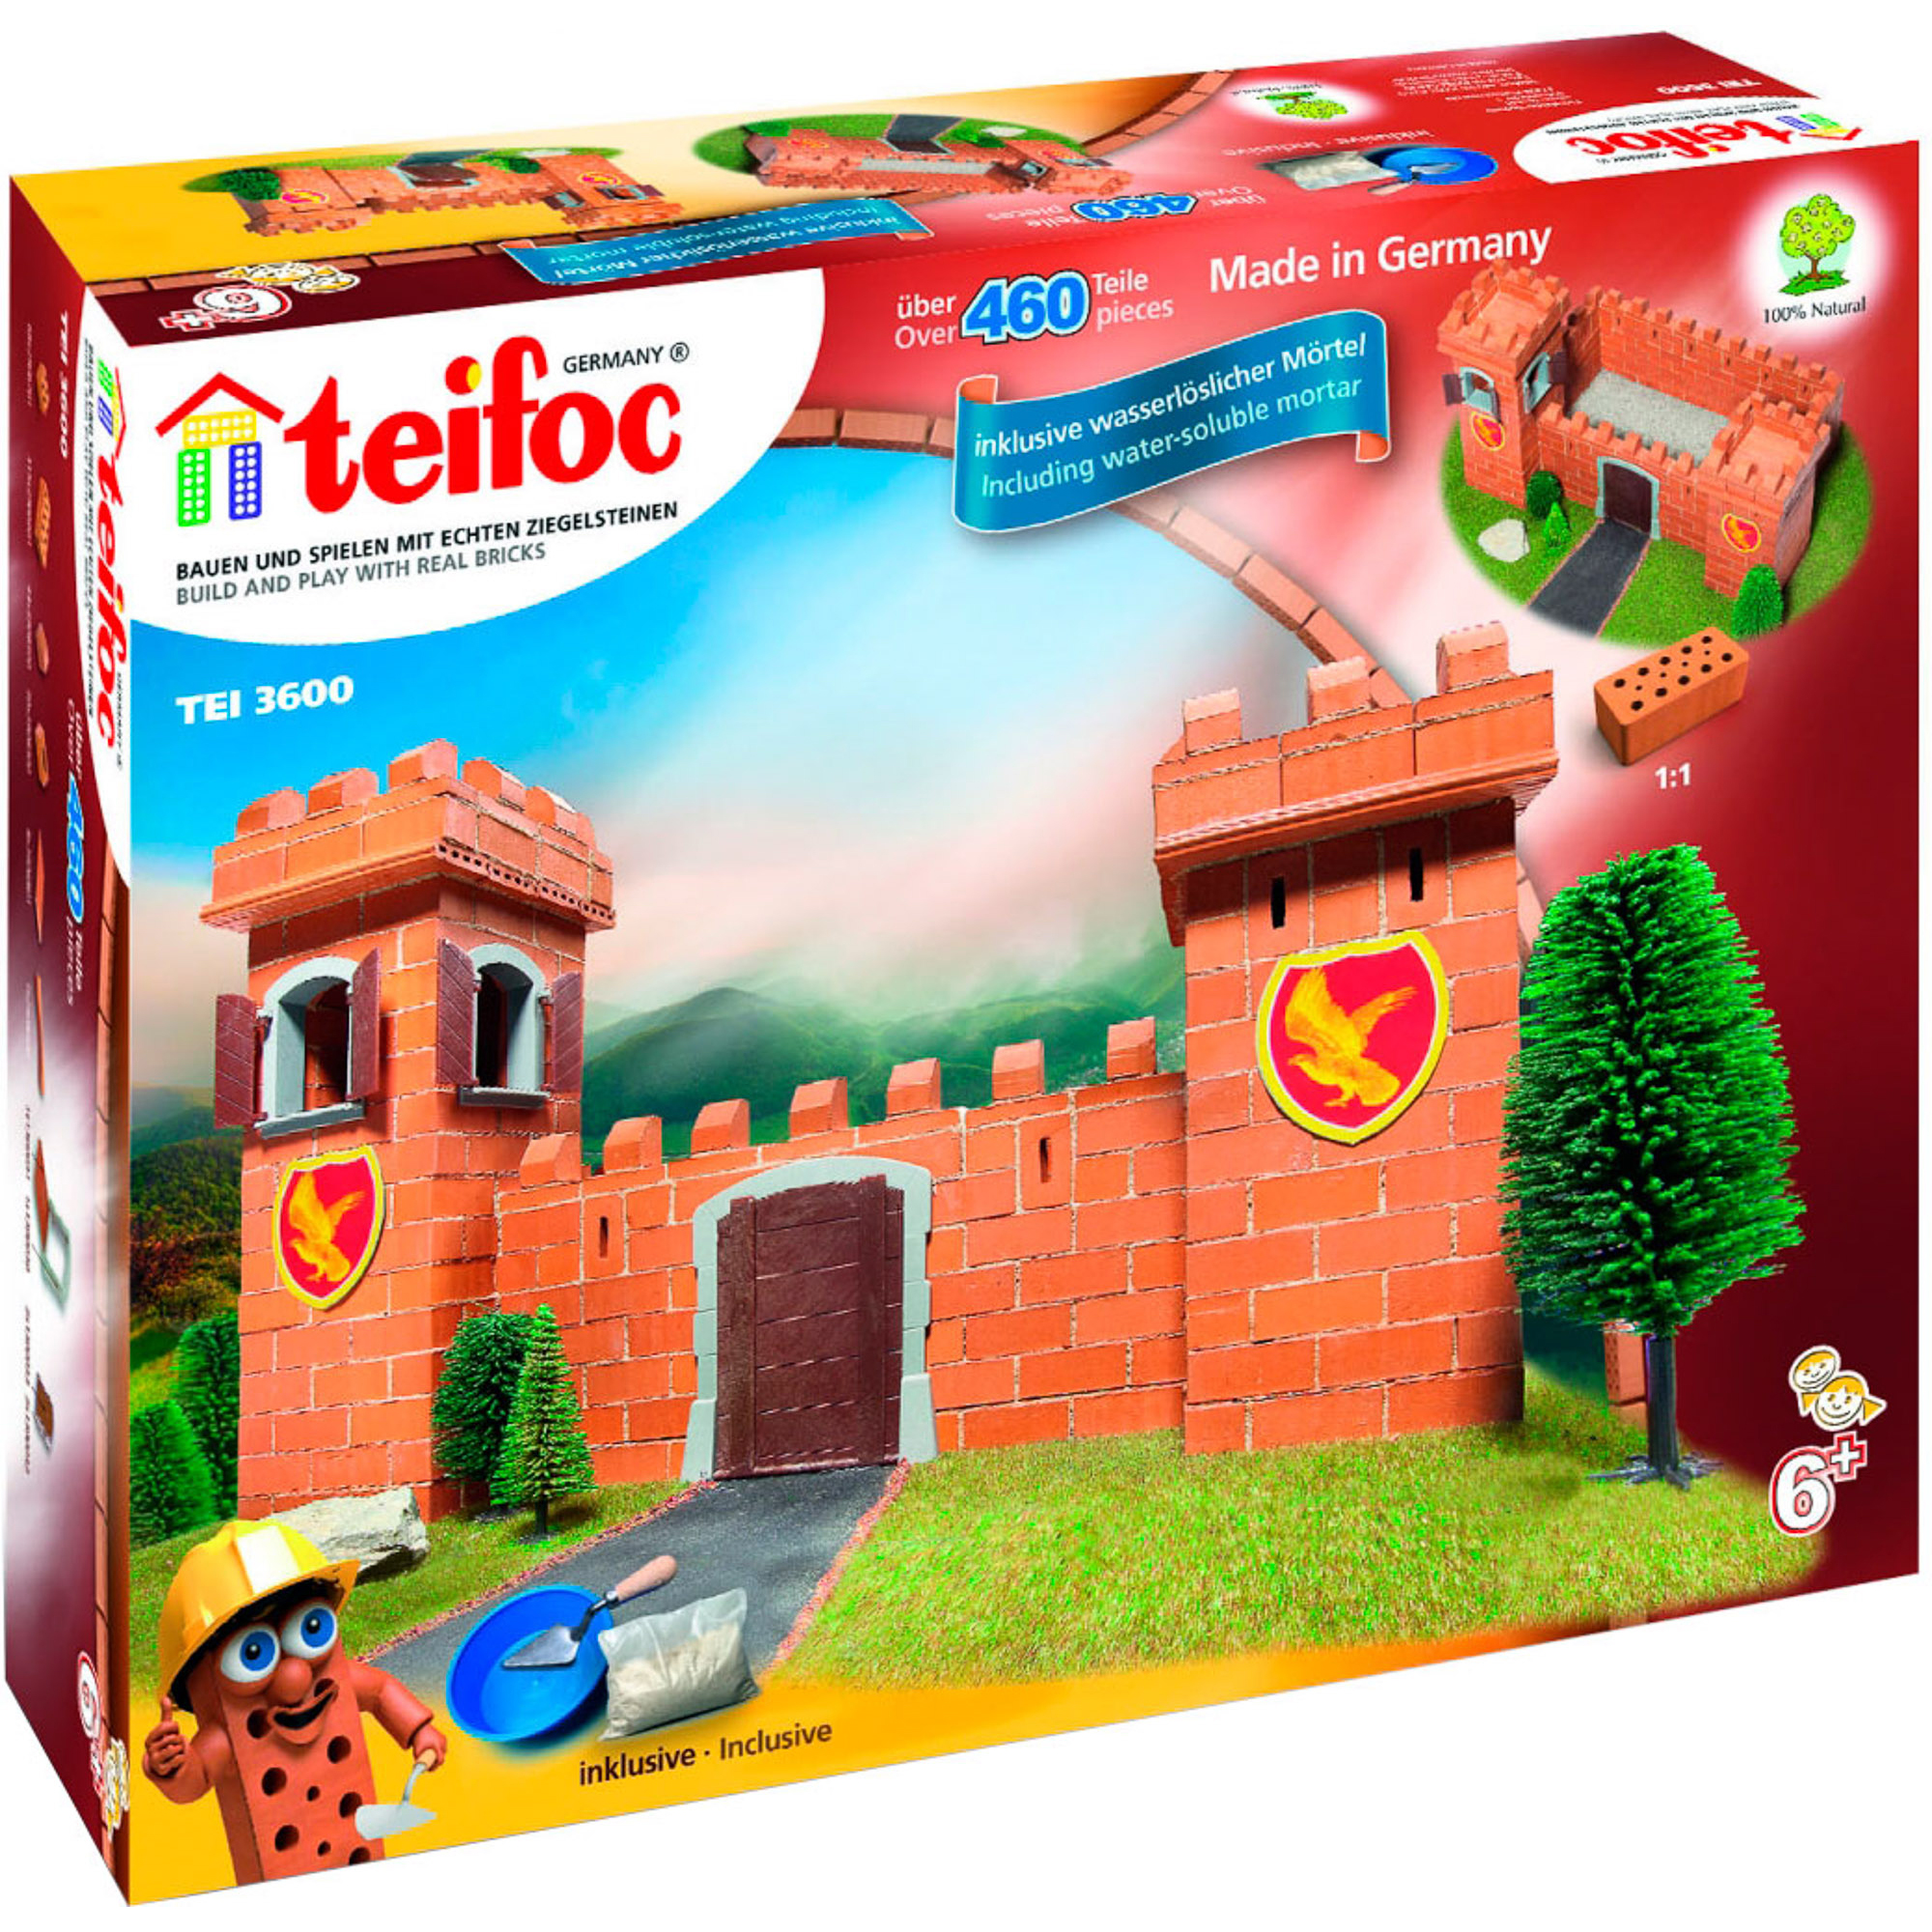 Игровой набор TEIFOC Рыцарский замок TEI 3600 teifoc tei 4300 stone blocks framework house multi colour half timbered brick building kit